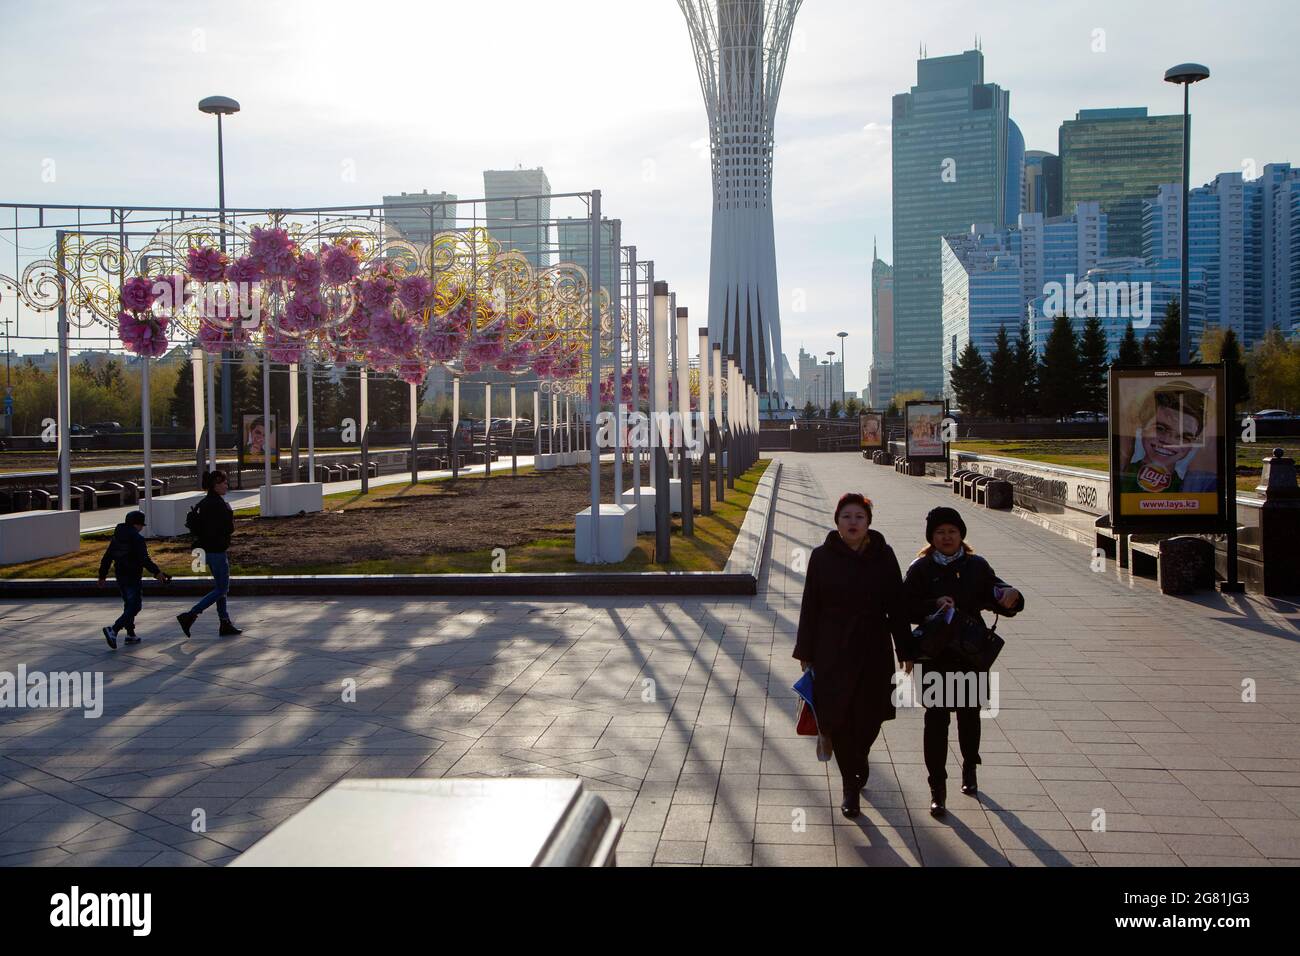 Astana Nur Sultan Kazajstan 4 28 17 Estructuras Arquitectonicas Futuristas Y Vida Cotidiana En Astana La Capital De Kazajstan Fotografia De Stock Alamy